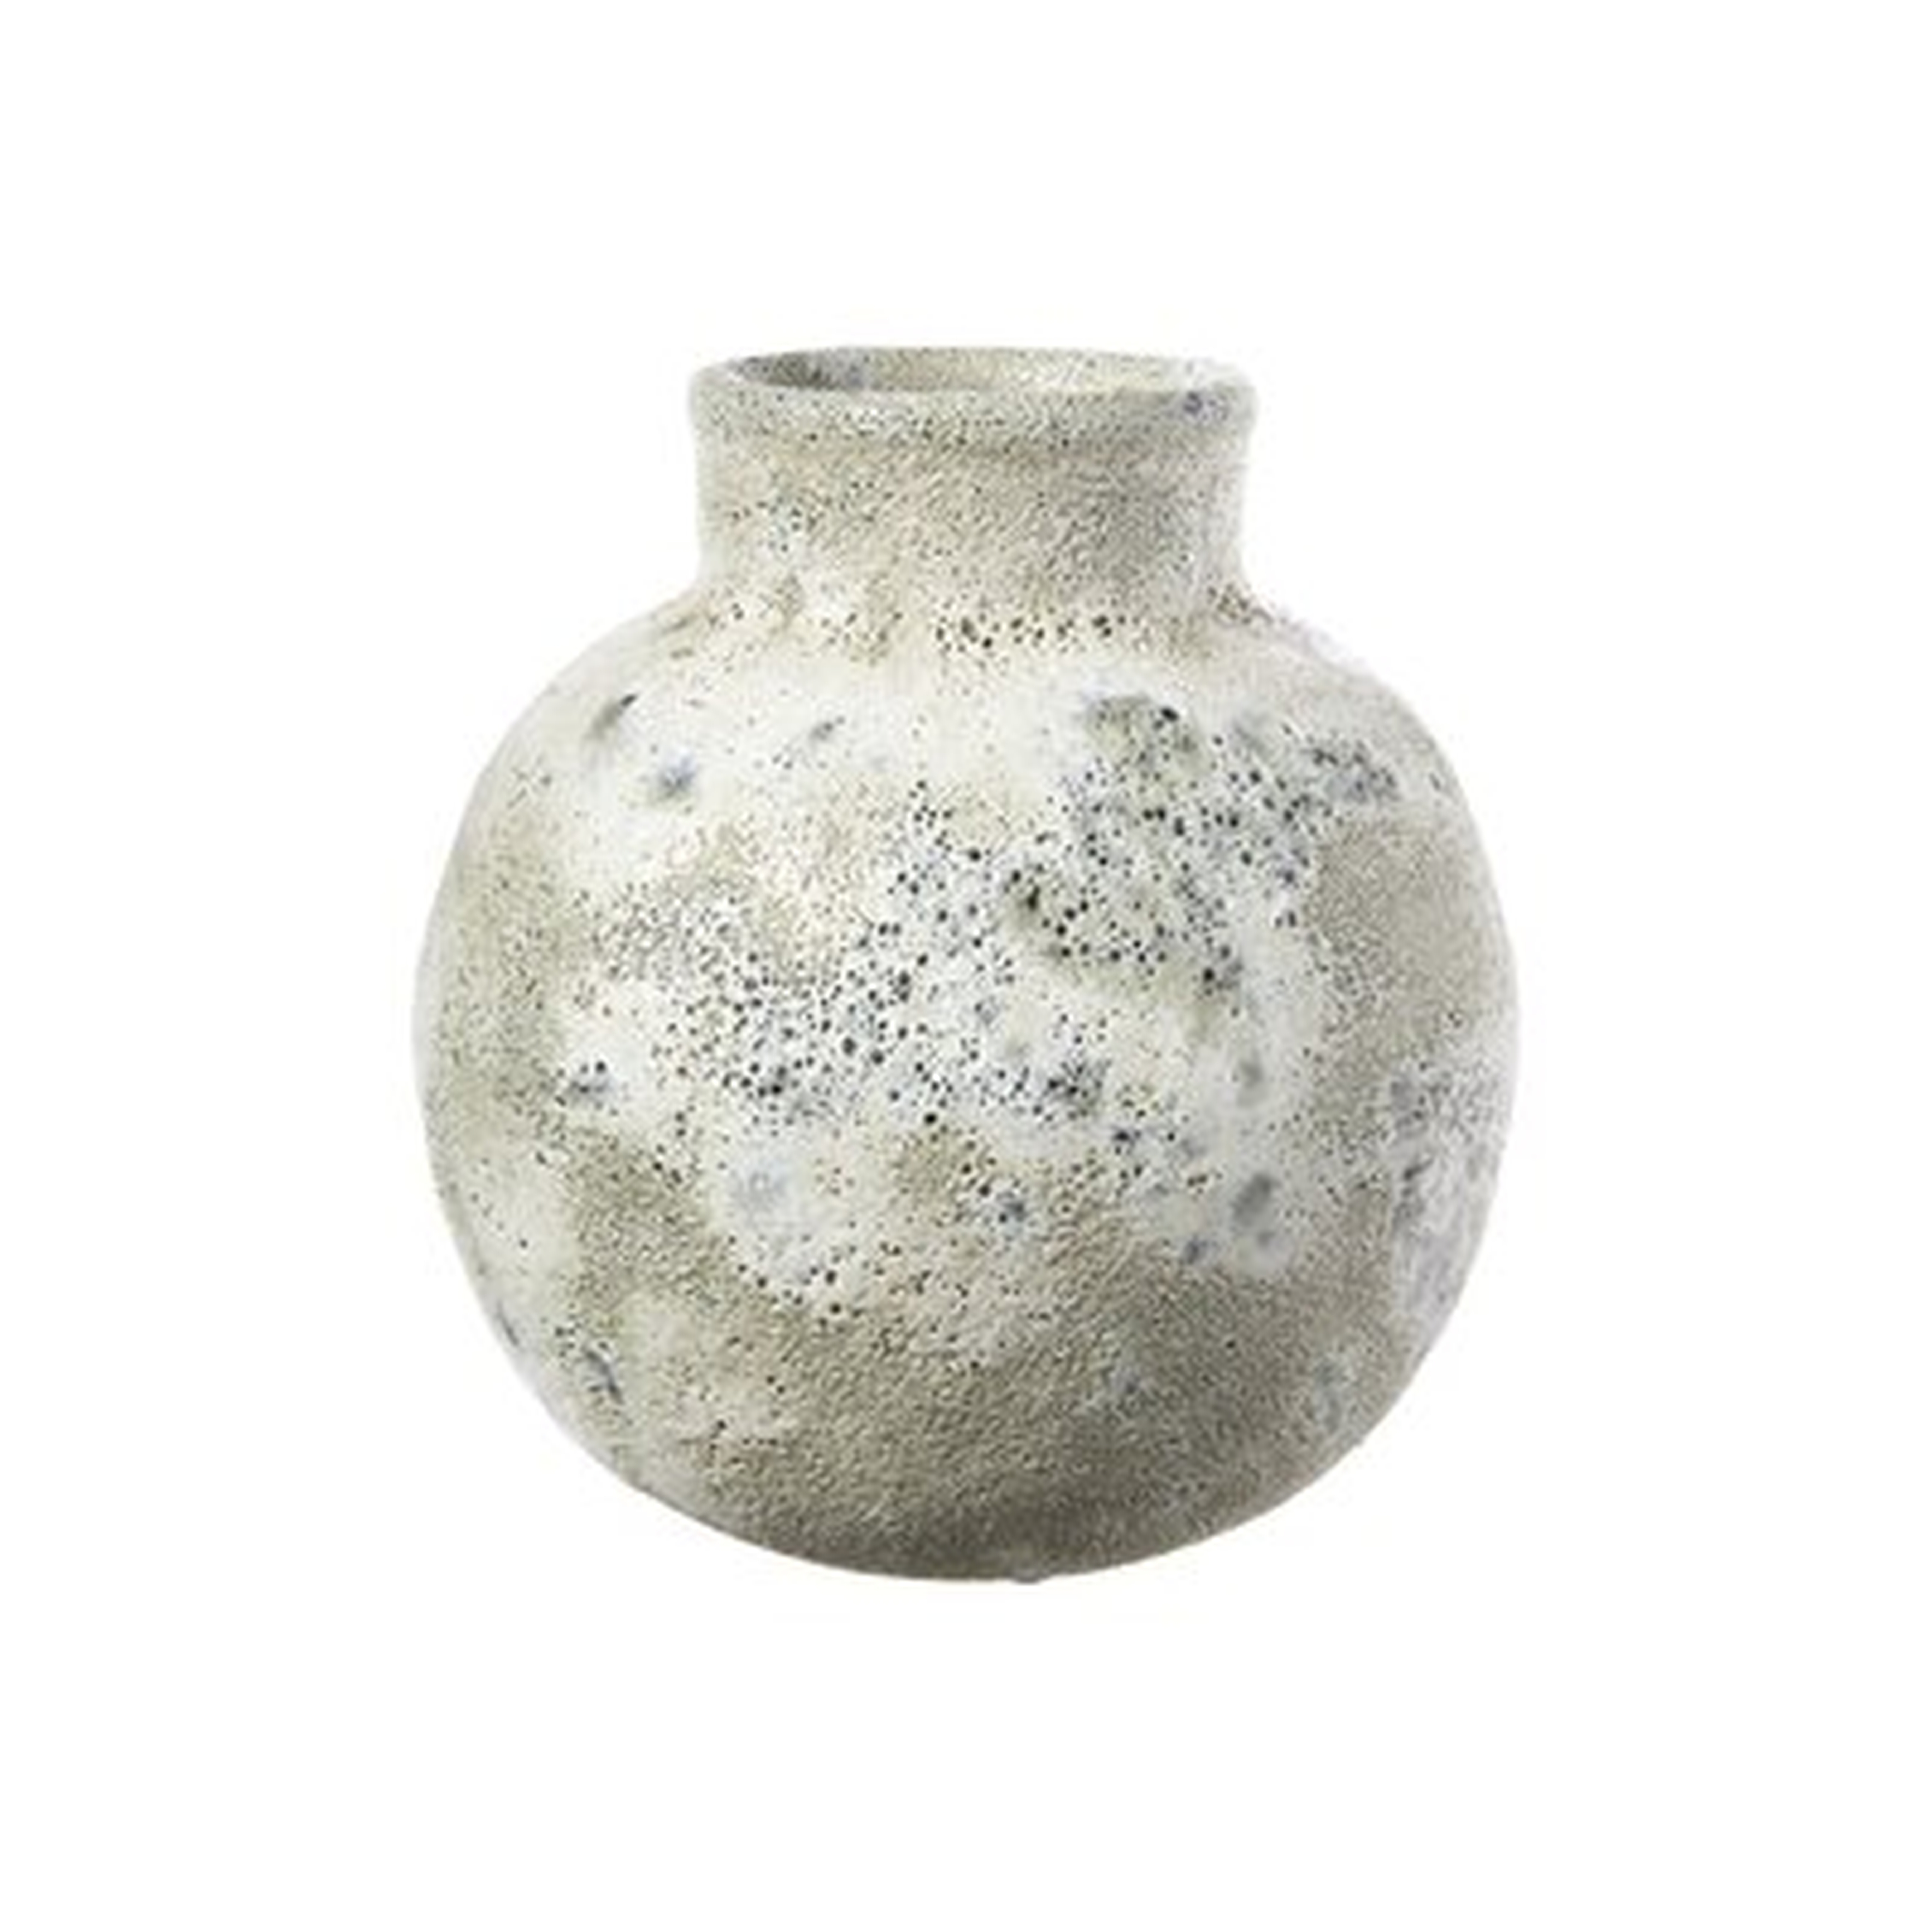 Vrtanes Light Brown Ceramic Table Vase - Wayfair